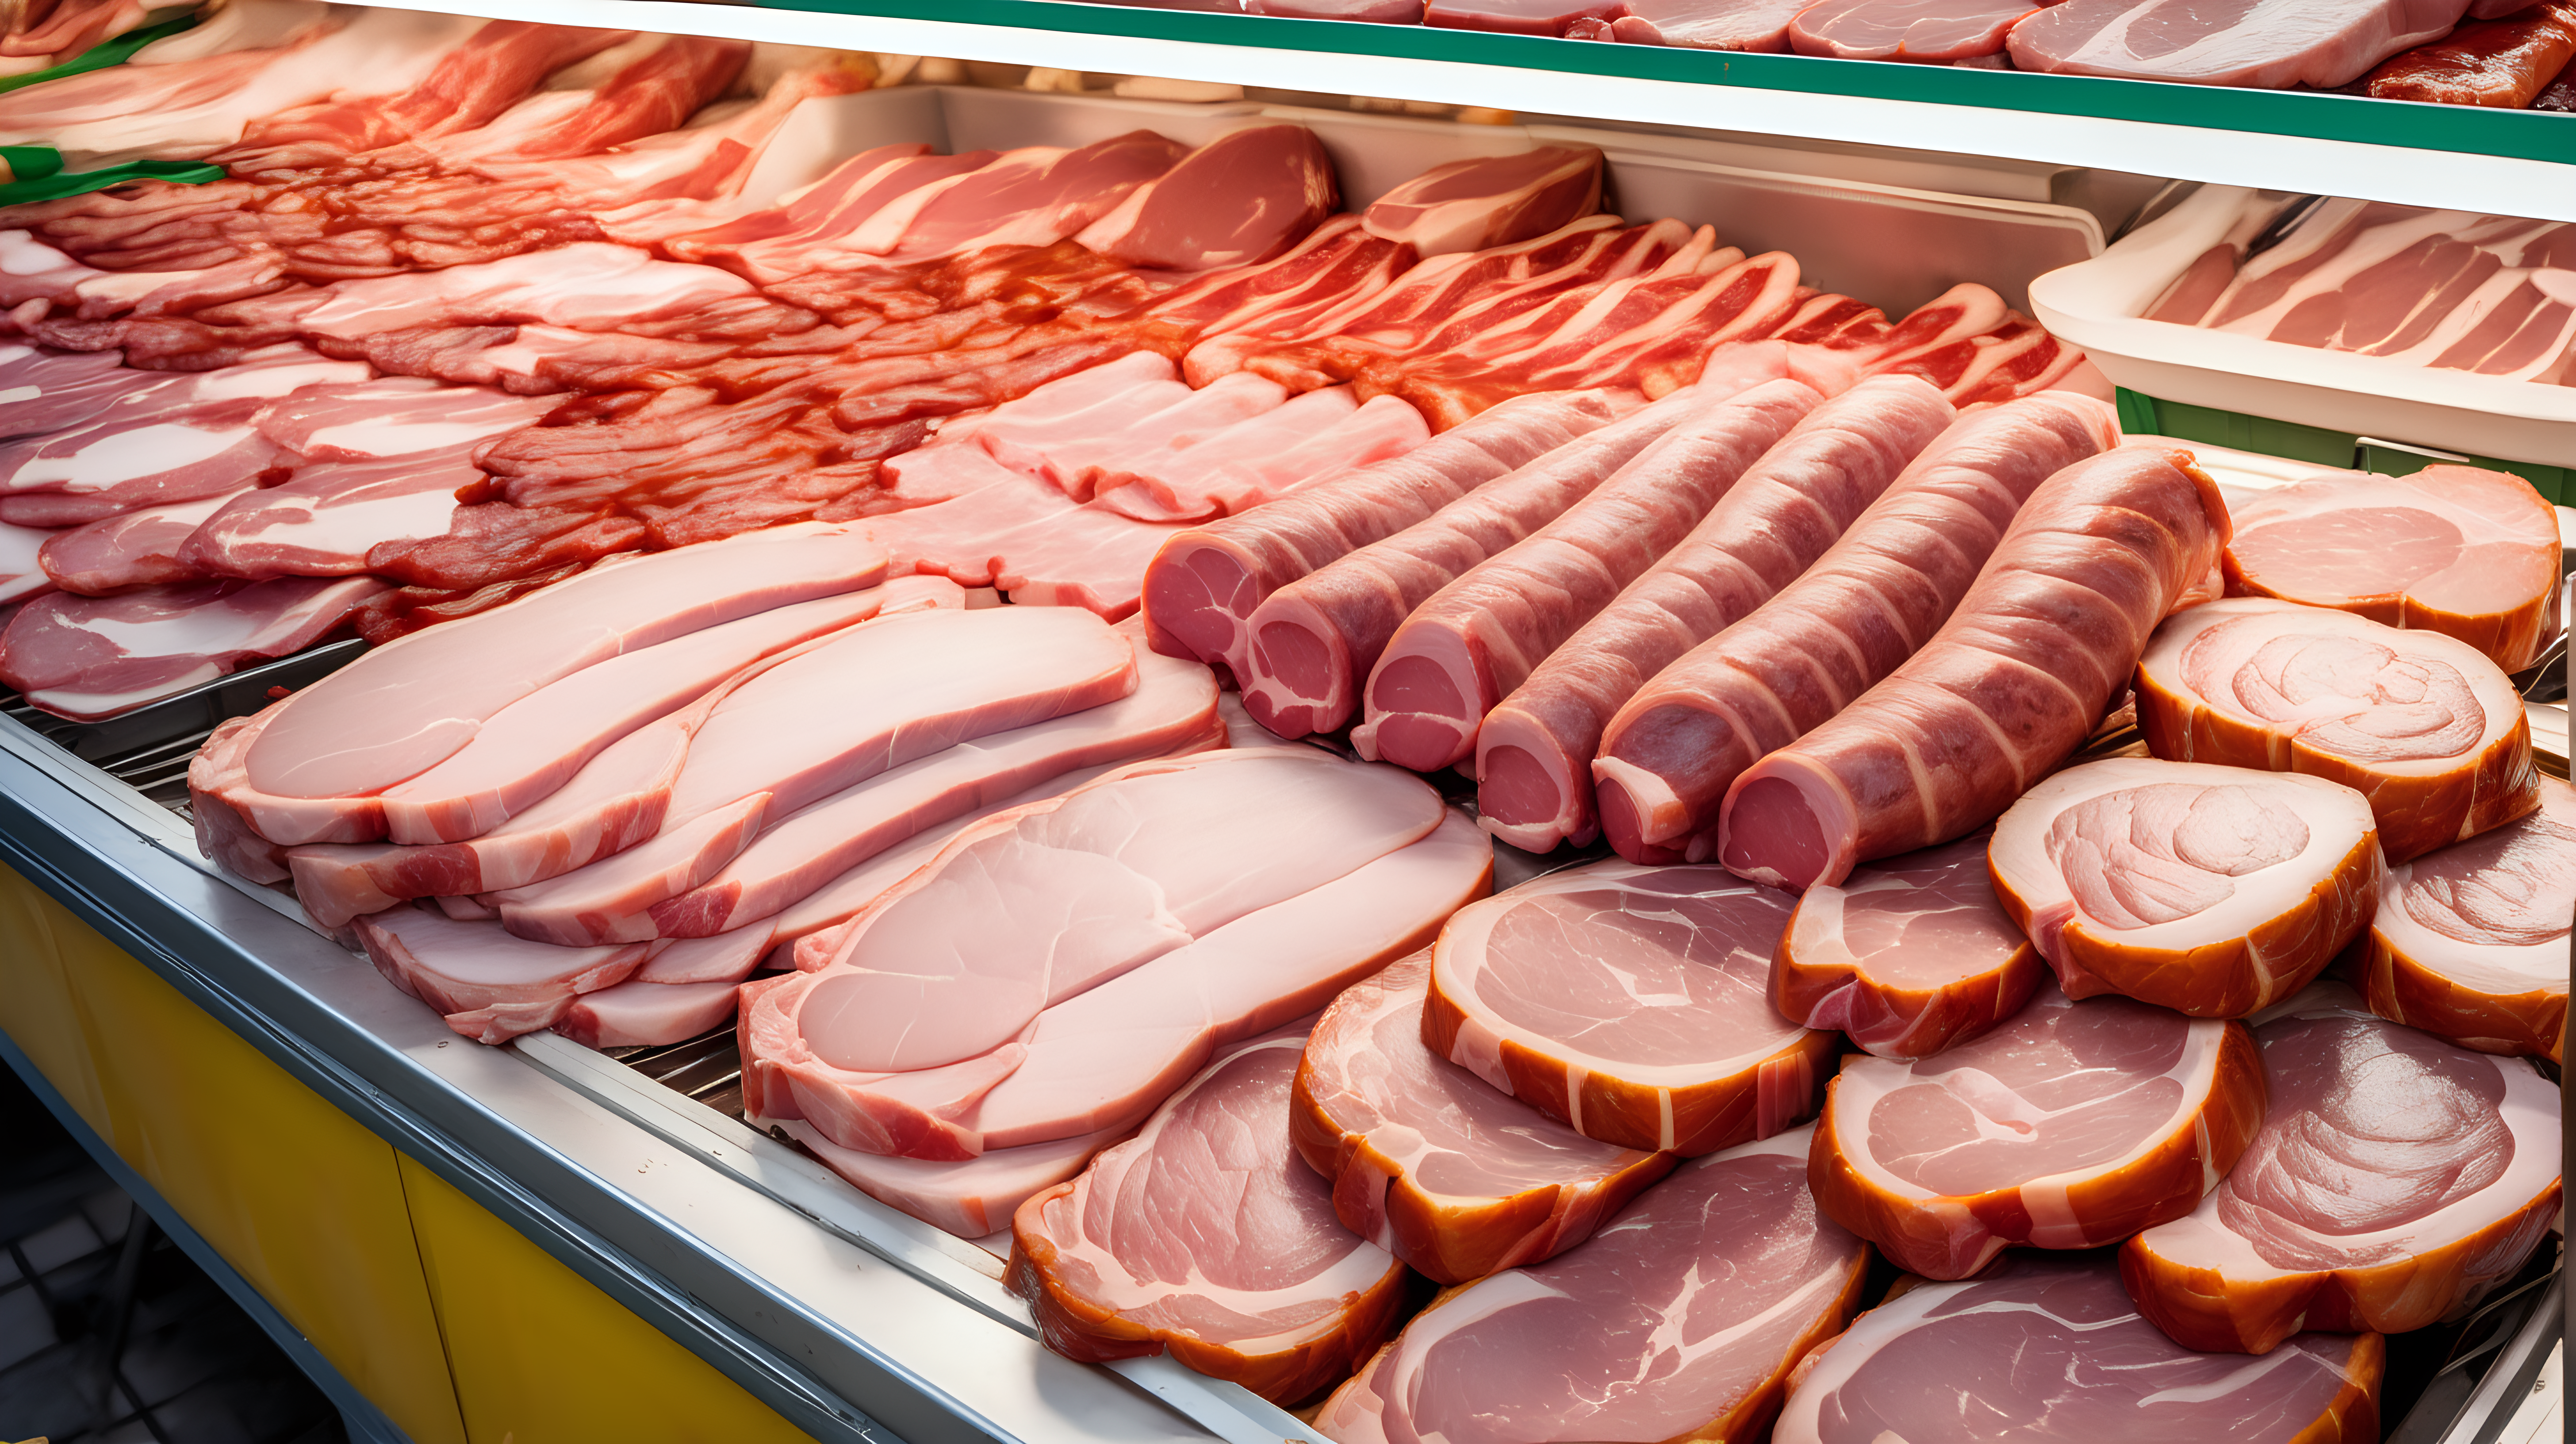 Ham, bacon, pork chops, pork loin and sausage in local market